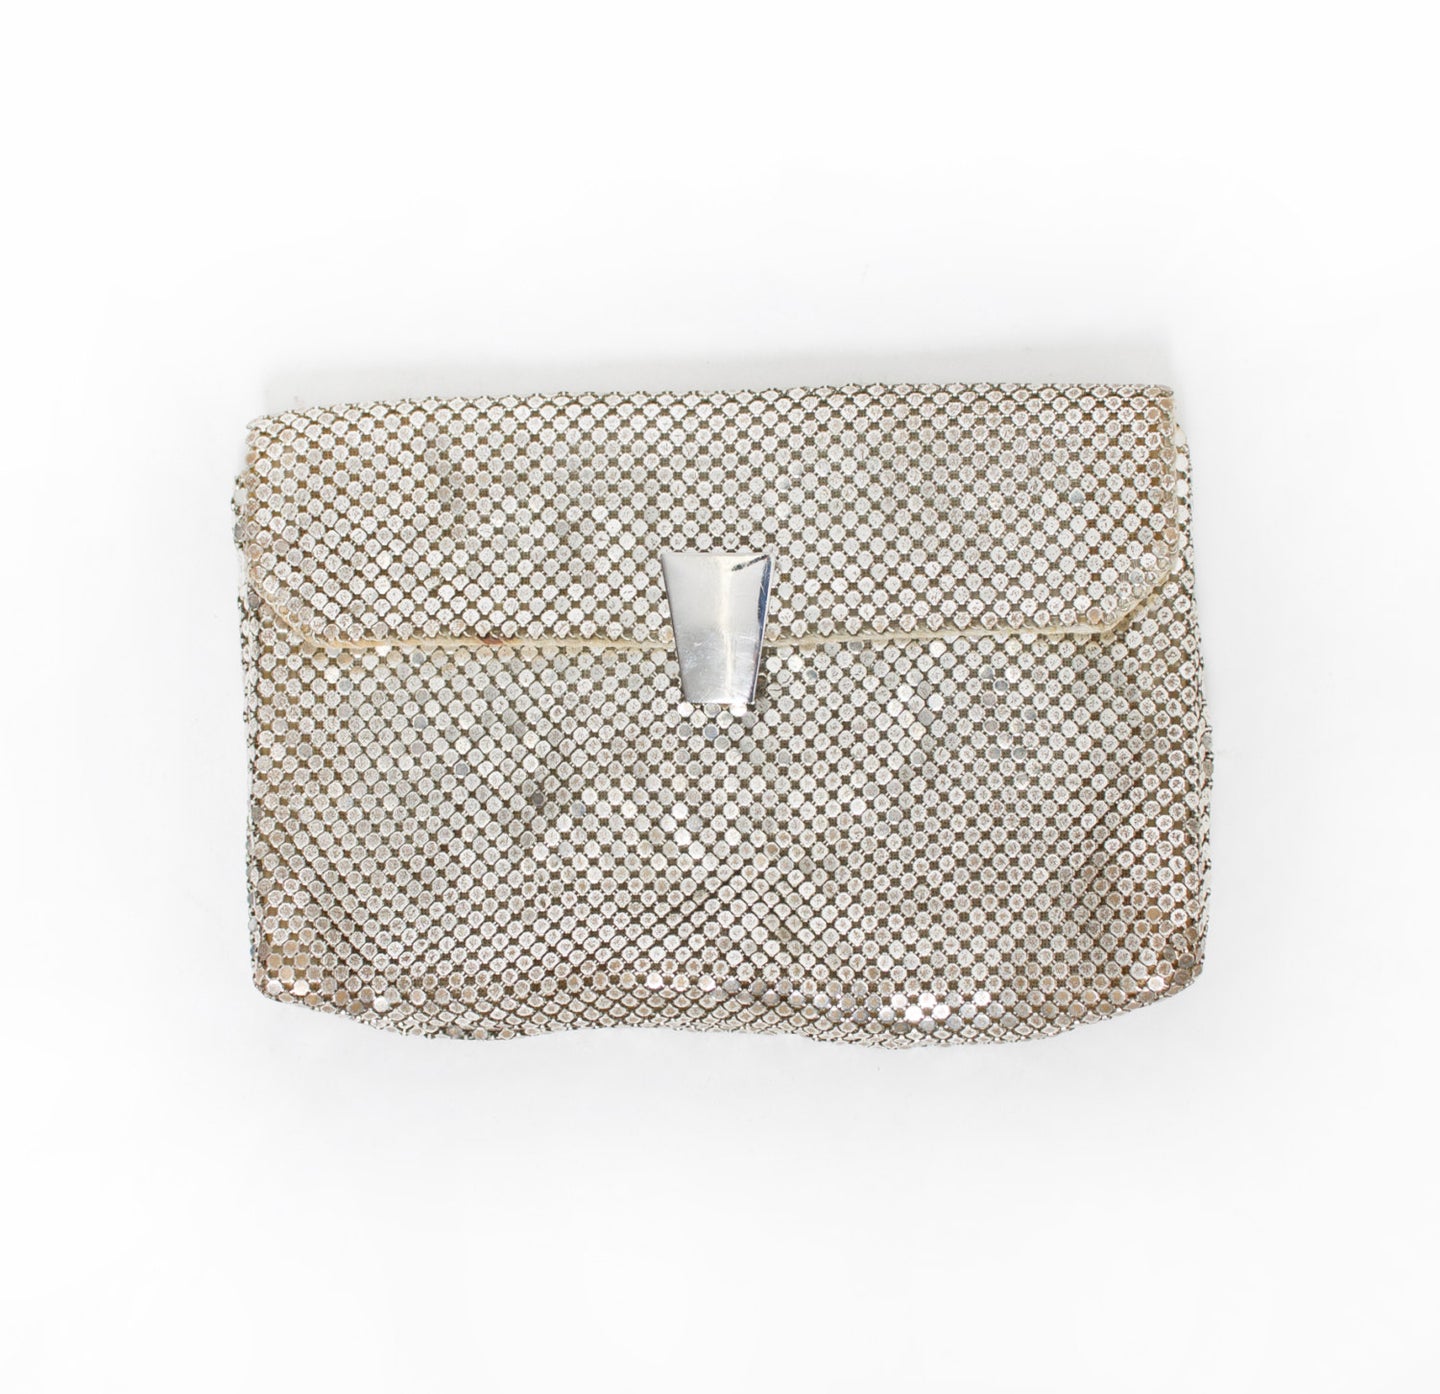 1950s Whitting & Davis Purse Mesh Silver Metal Clutch Bag